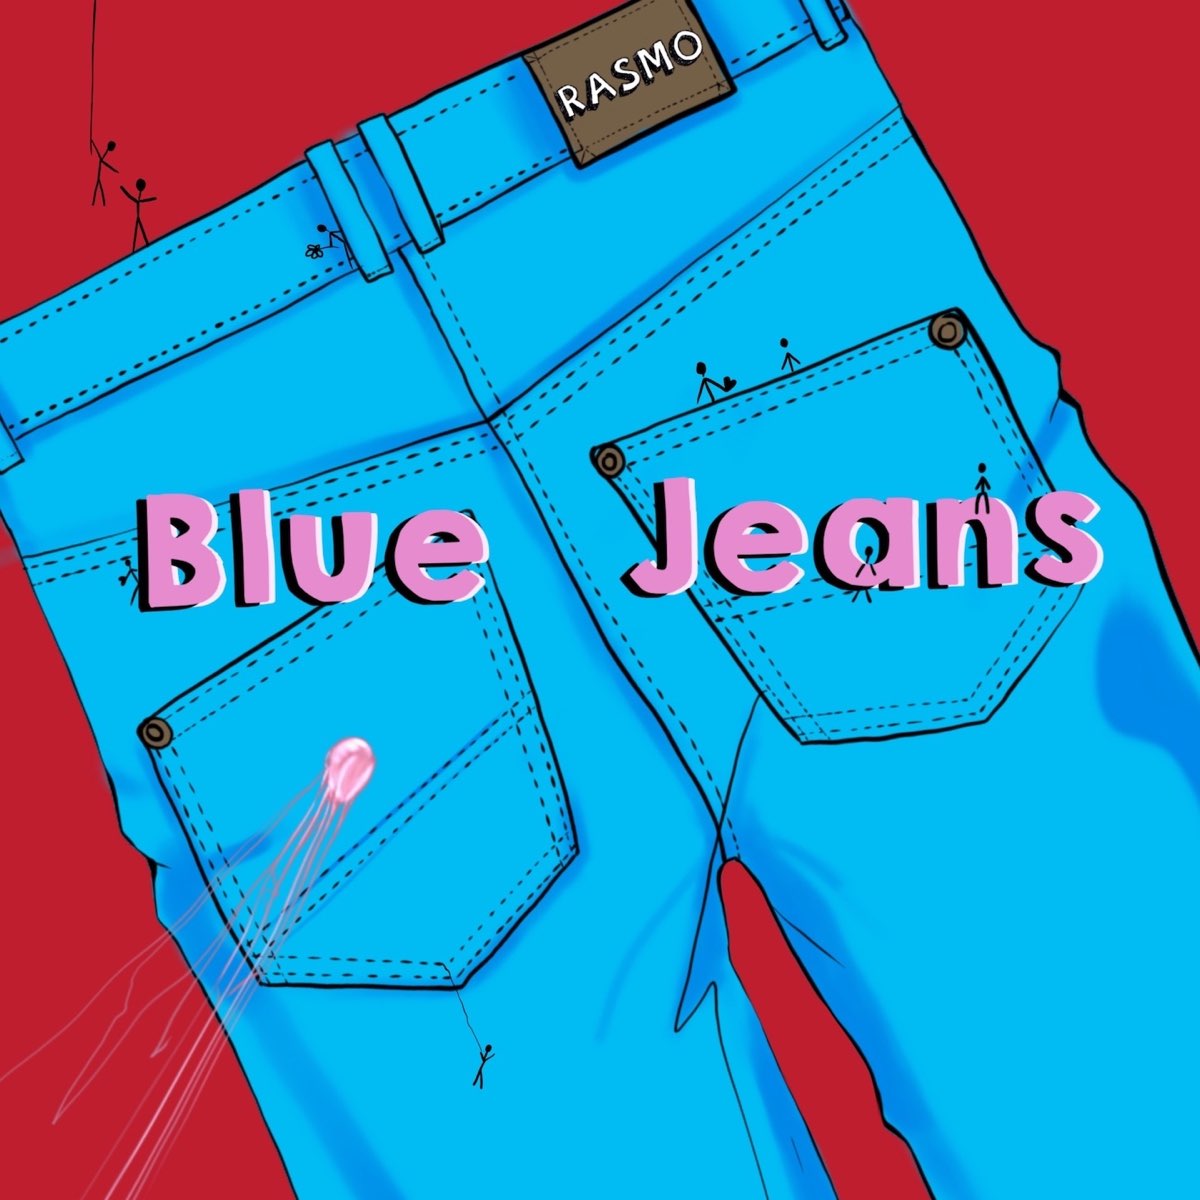 OMG New Jeans album. New Jeans first album Art. New Jeans album scan.